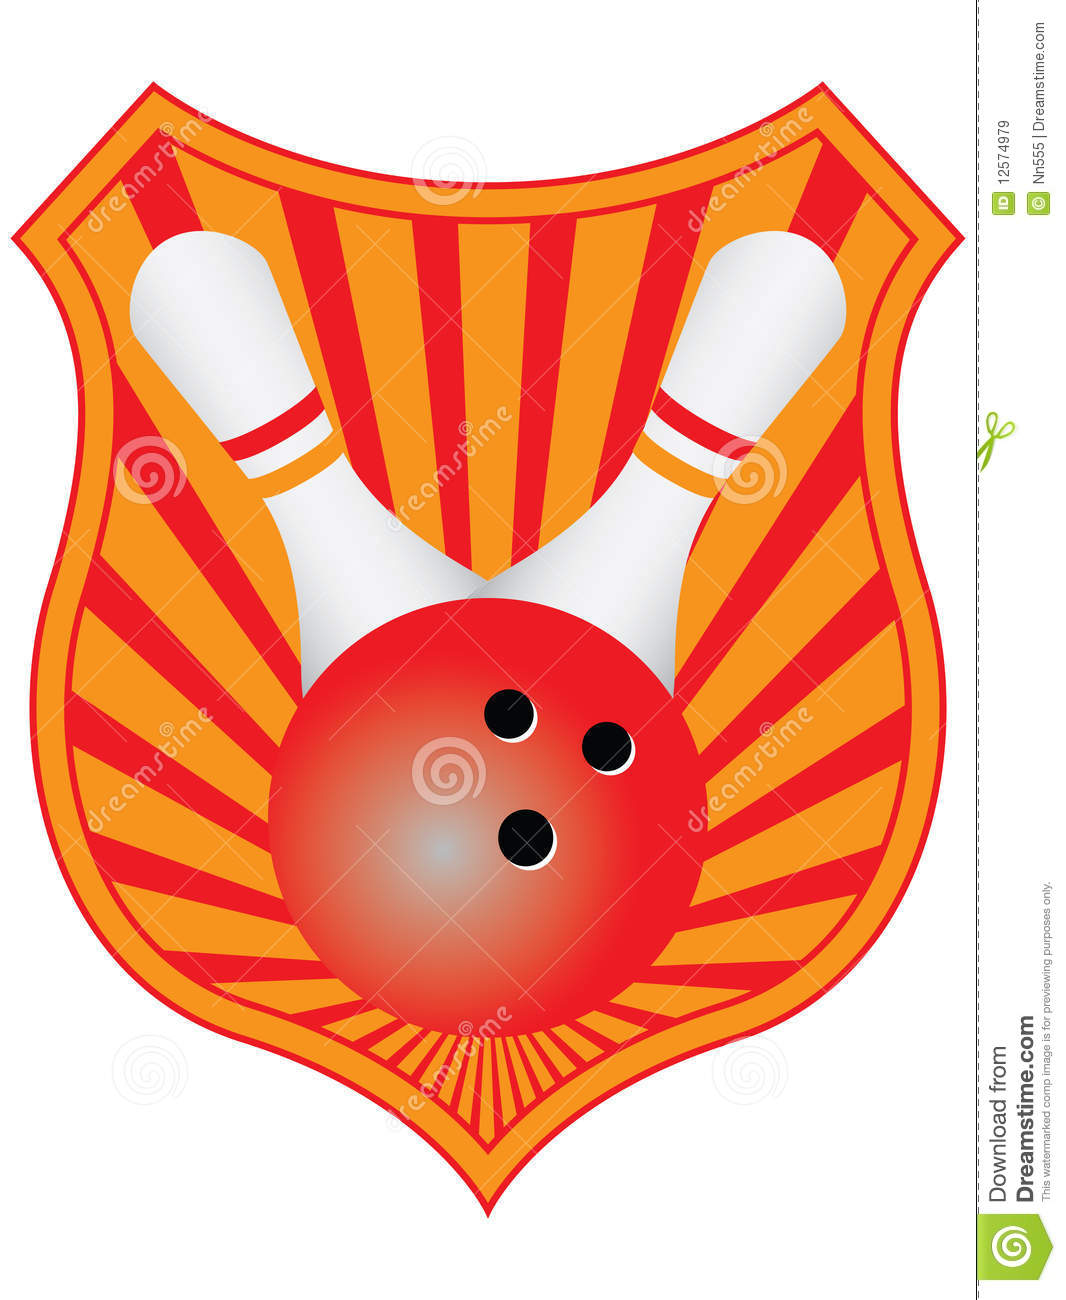 Bowling Emblem Royalty Free Stock Images   Image  12574979